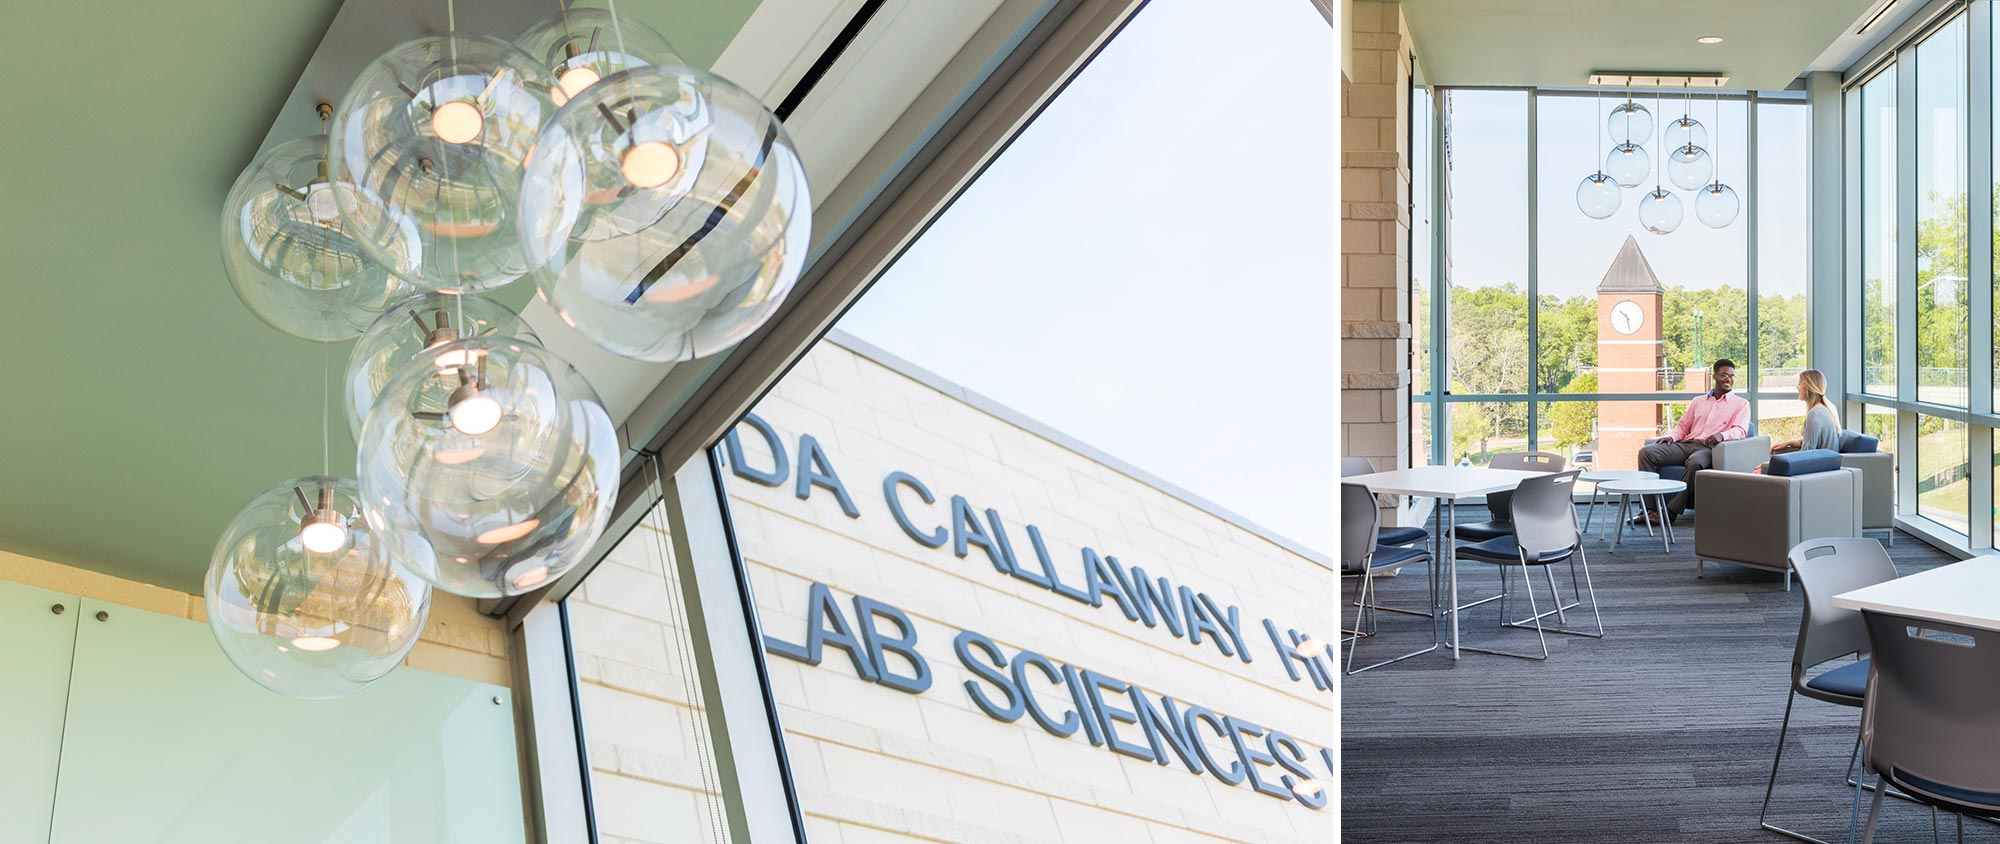 LaGrange College Ida Callaway Hudson Lab Sciences Building